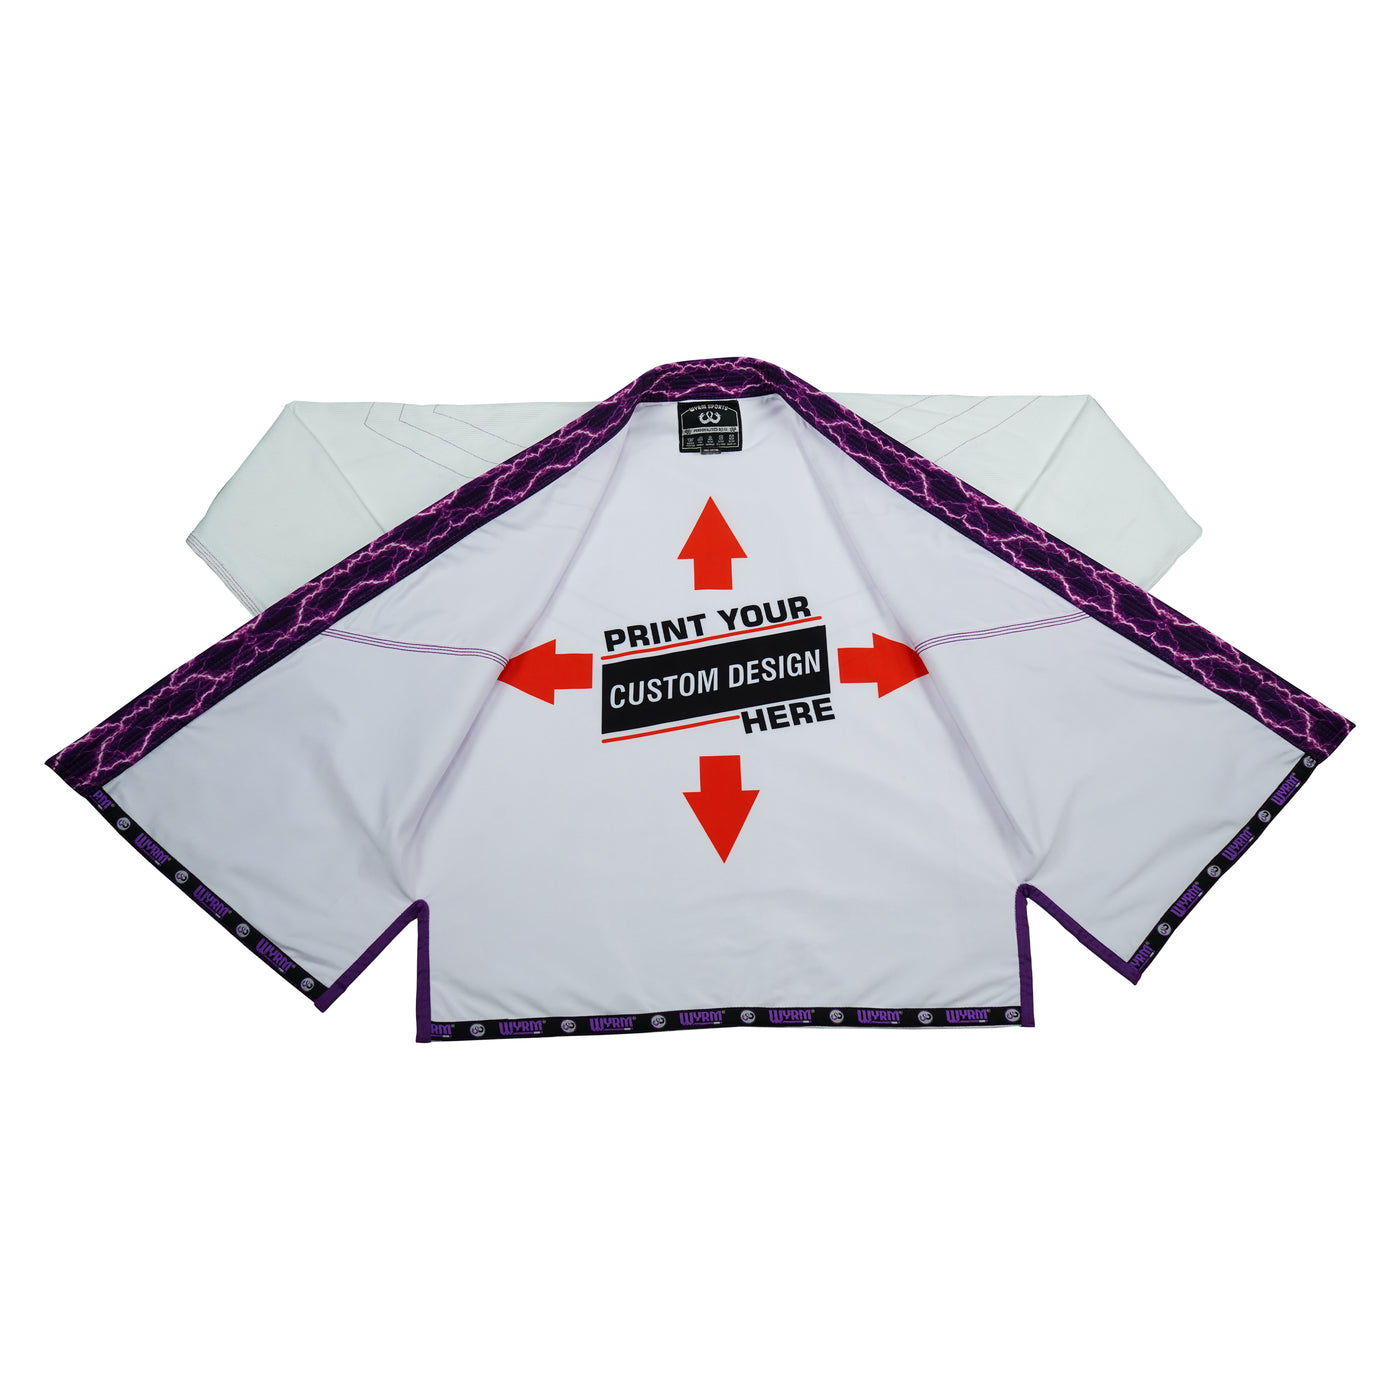 Premium Customized Logo White with Thunder Purple Brazilian Jiu Jitsu Gi